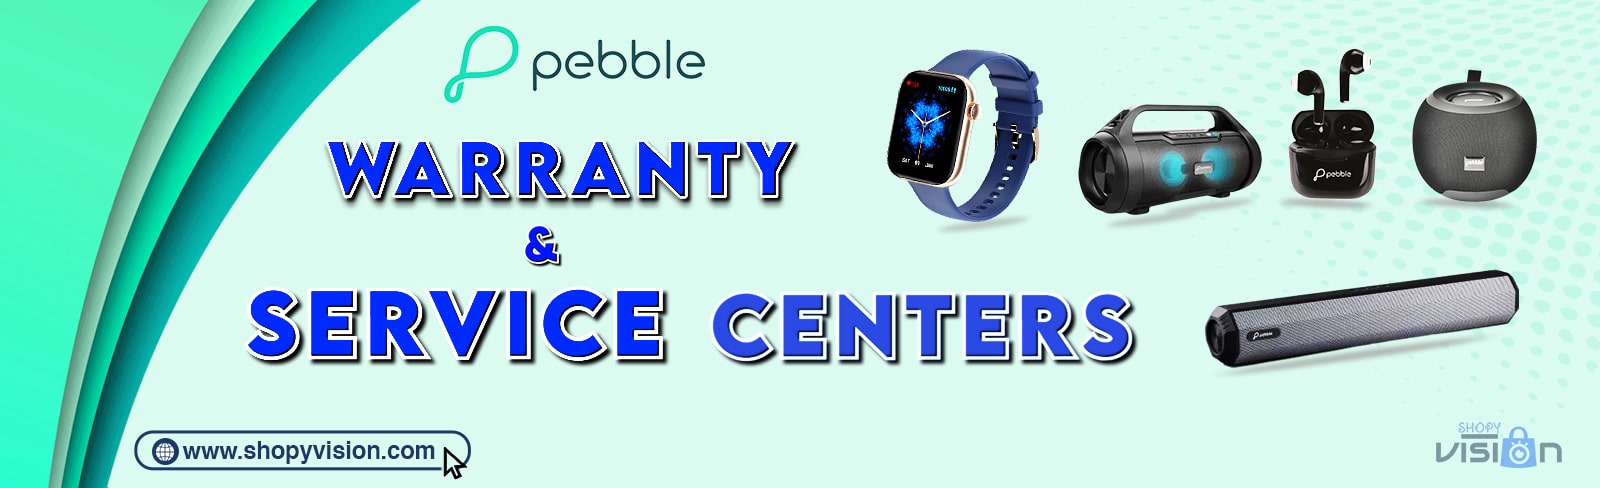 Pebble Warranty & Service Center In india Desktop Banner